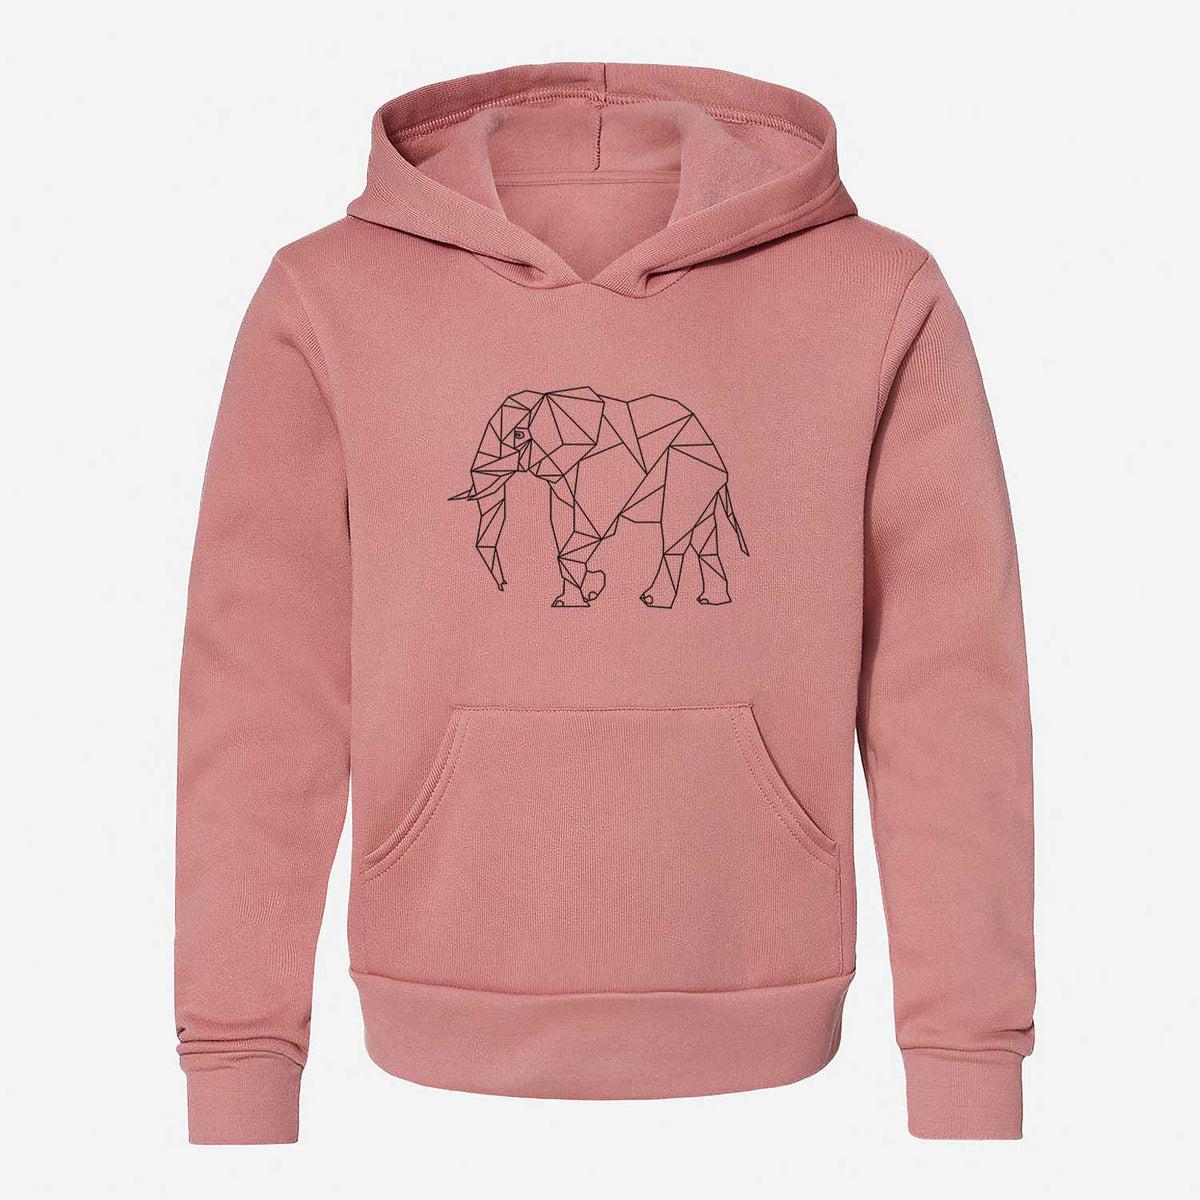 Geometric Elephant - Youth Hoodie Sweatshirt